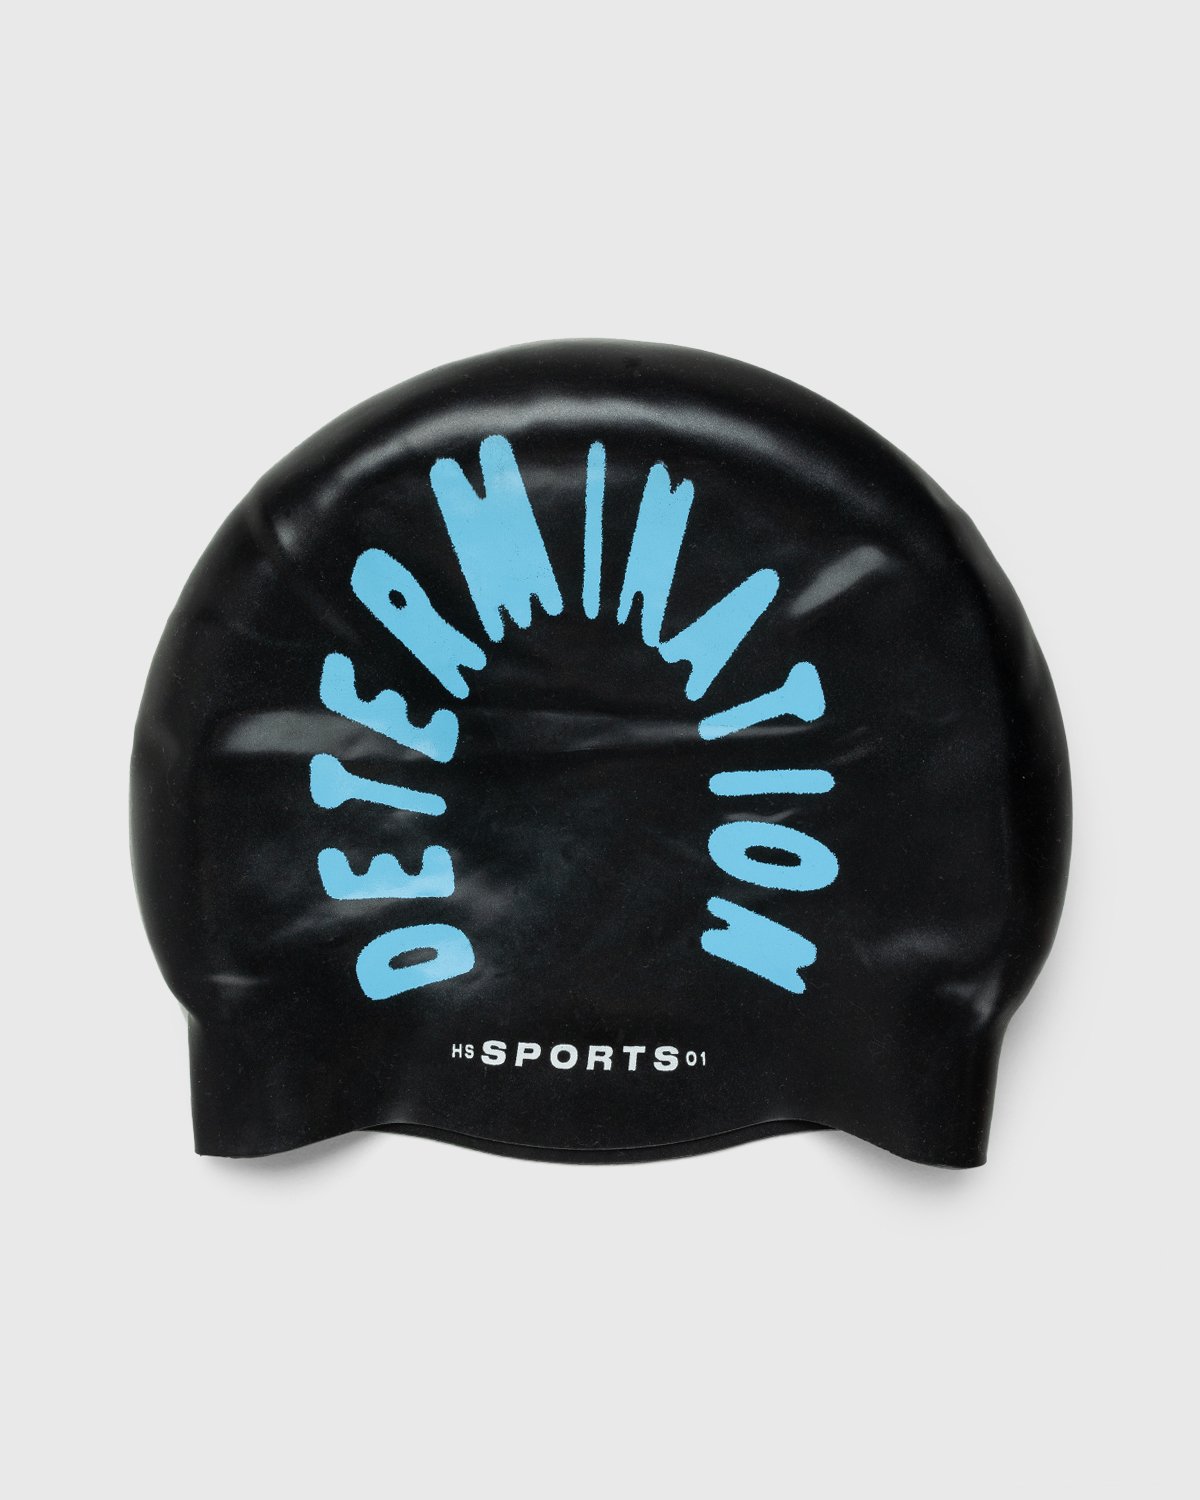 Speedo x Highsnobiety - HS Sports Determination Silicone Swim Cap Black - Lifestyle - Black - Image 2